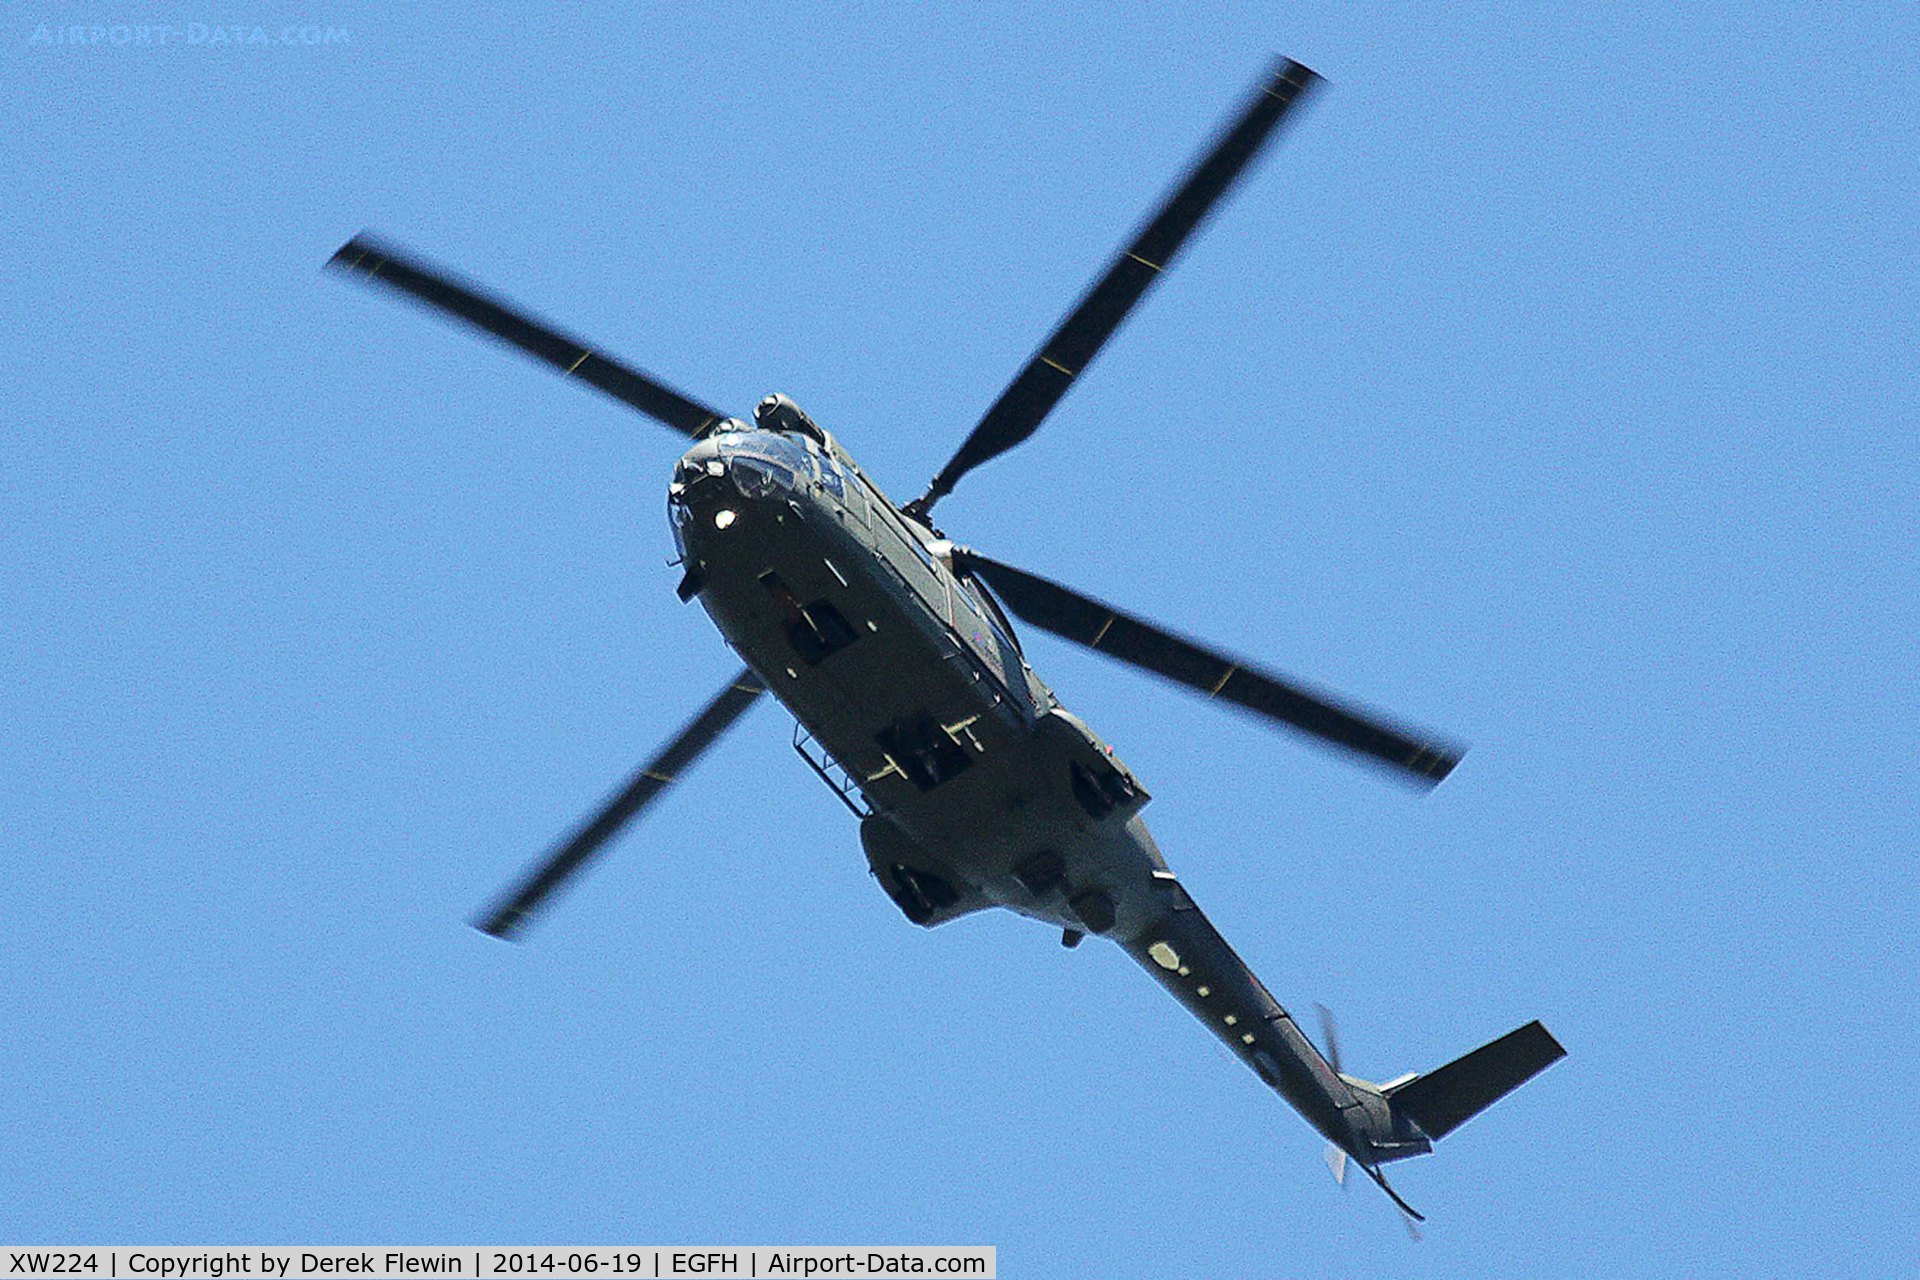 XW224, Westland Puma HC.2 C/N 1166, Puma HC.2, call sign BDN035, seen in the overhead at EGFH, leading another Puma.